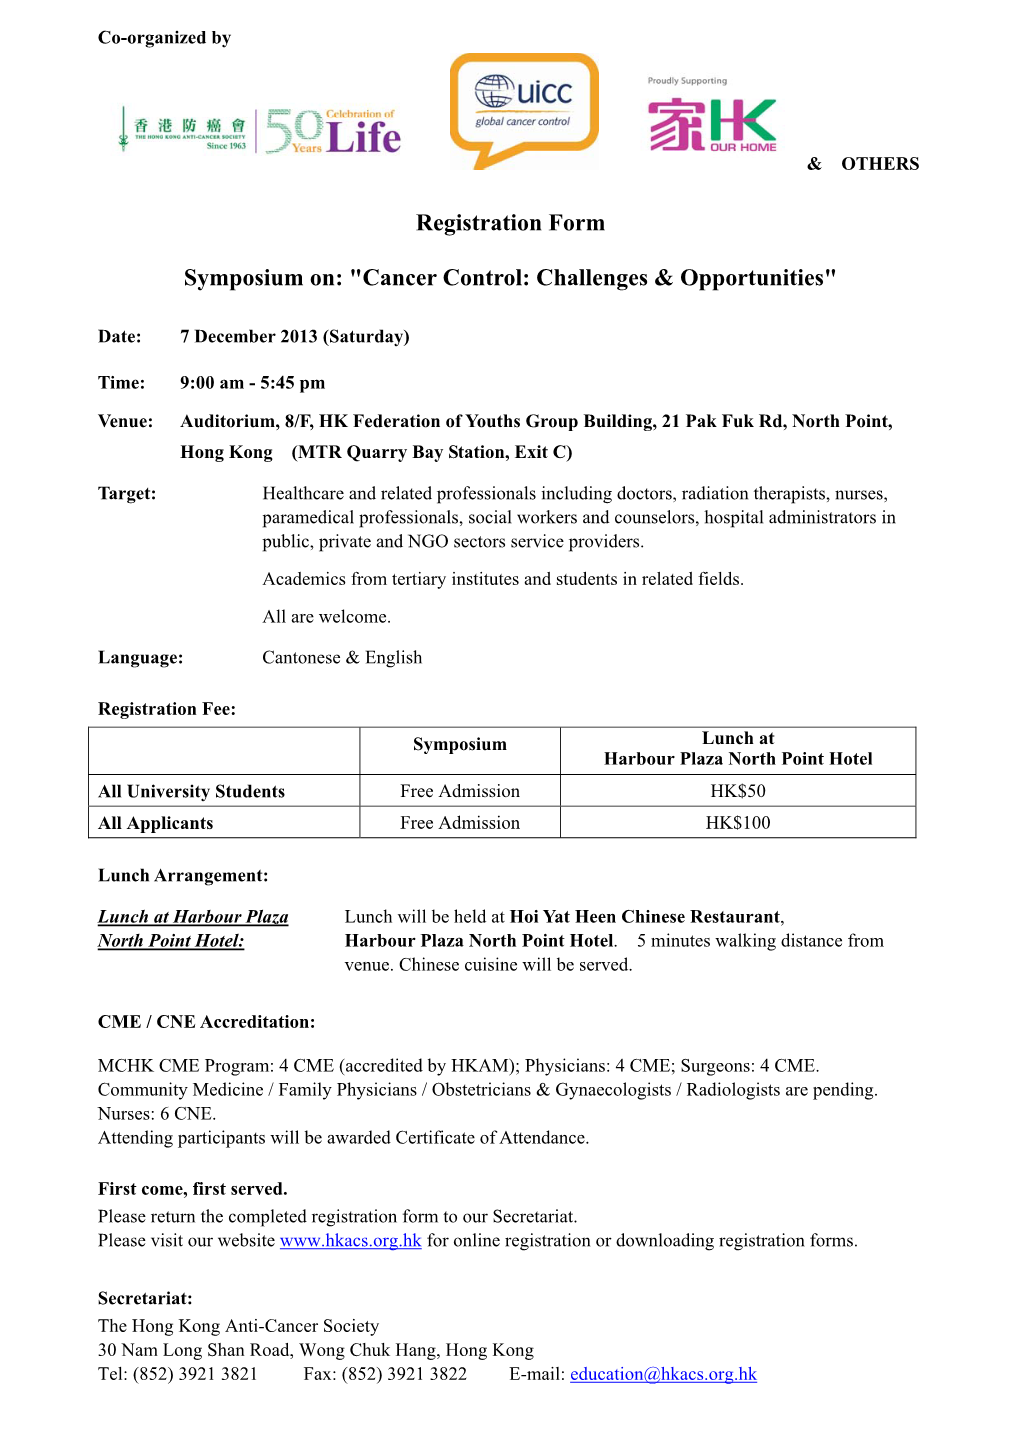 Registration Form Symposium On: "Cancer Control: Challenges